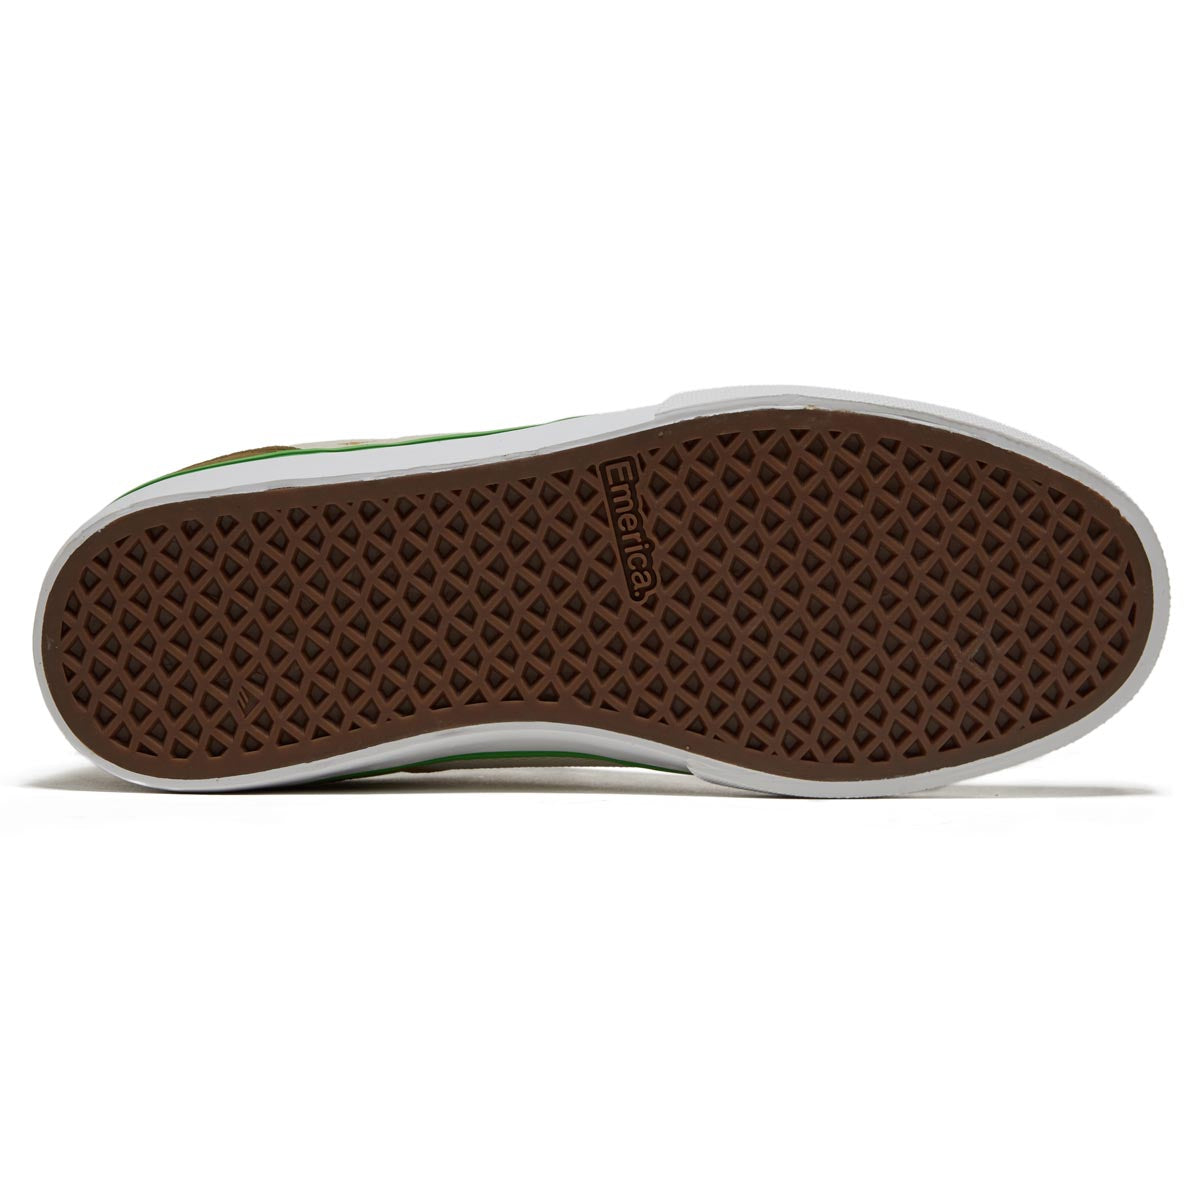 Emerica The Low Vulc Shoes - Tan/Green image 4